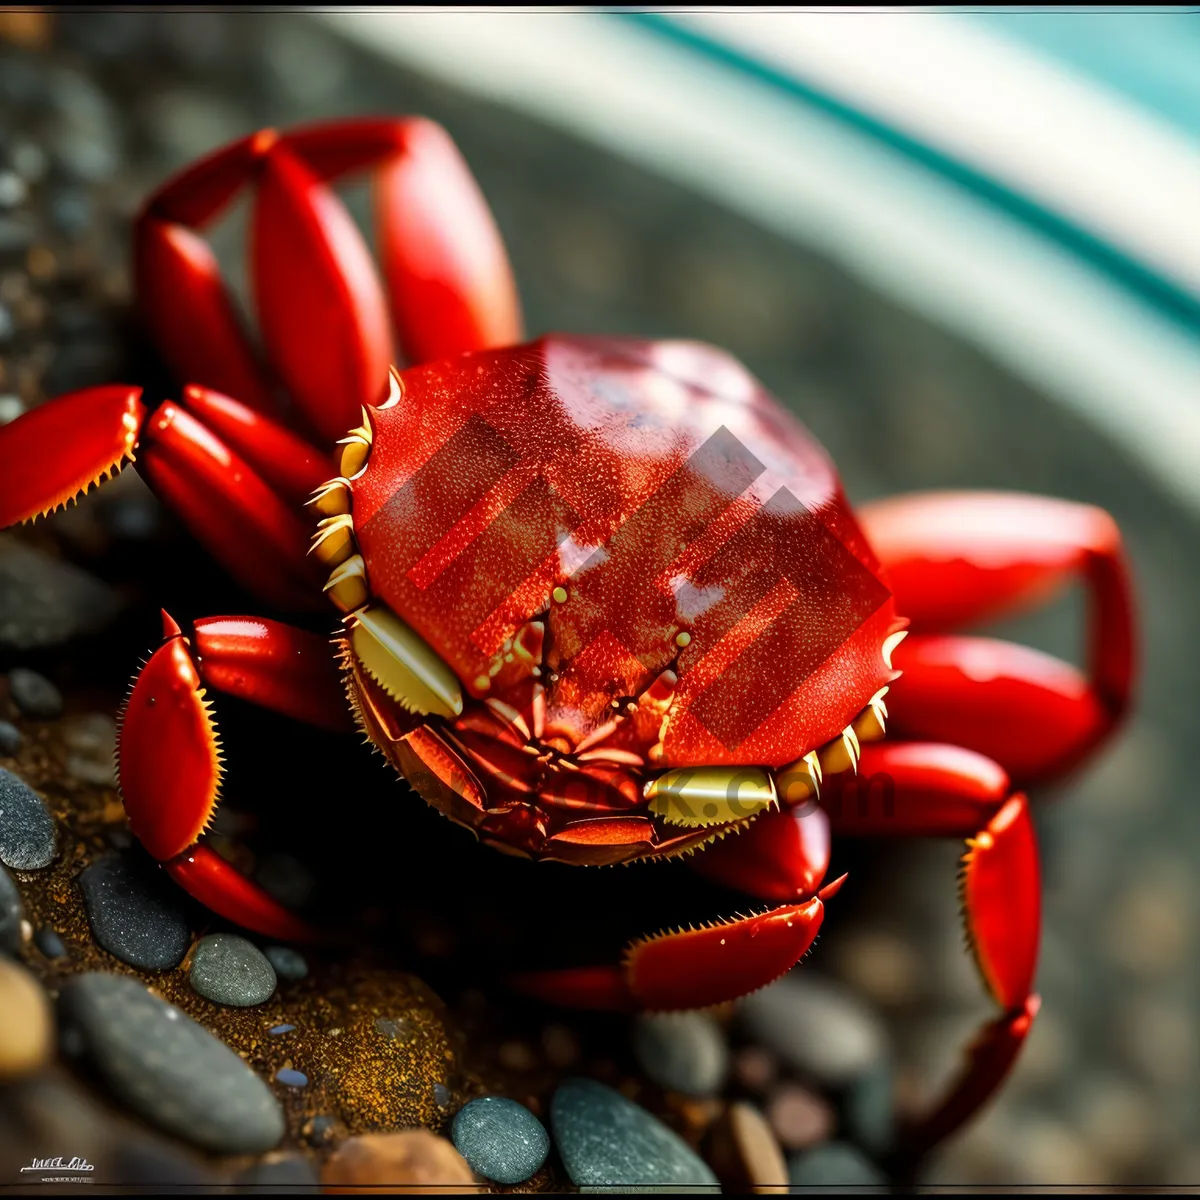 Picture of Crab Feast on Rock: Delicious Crustacean Arthropod Delight